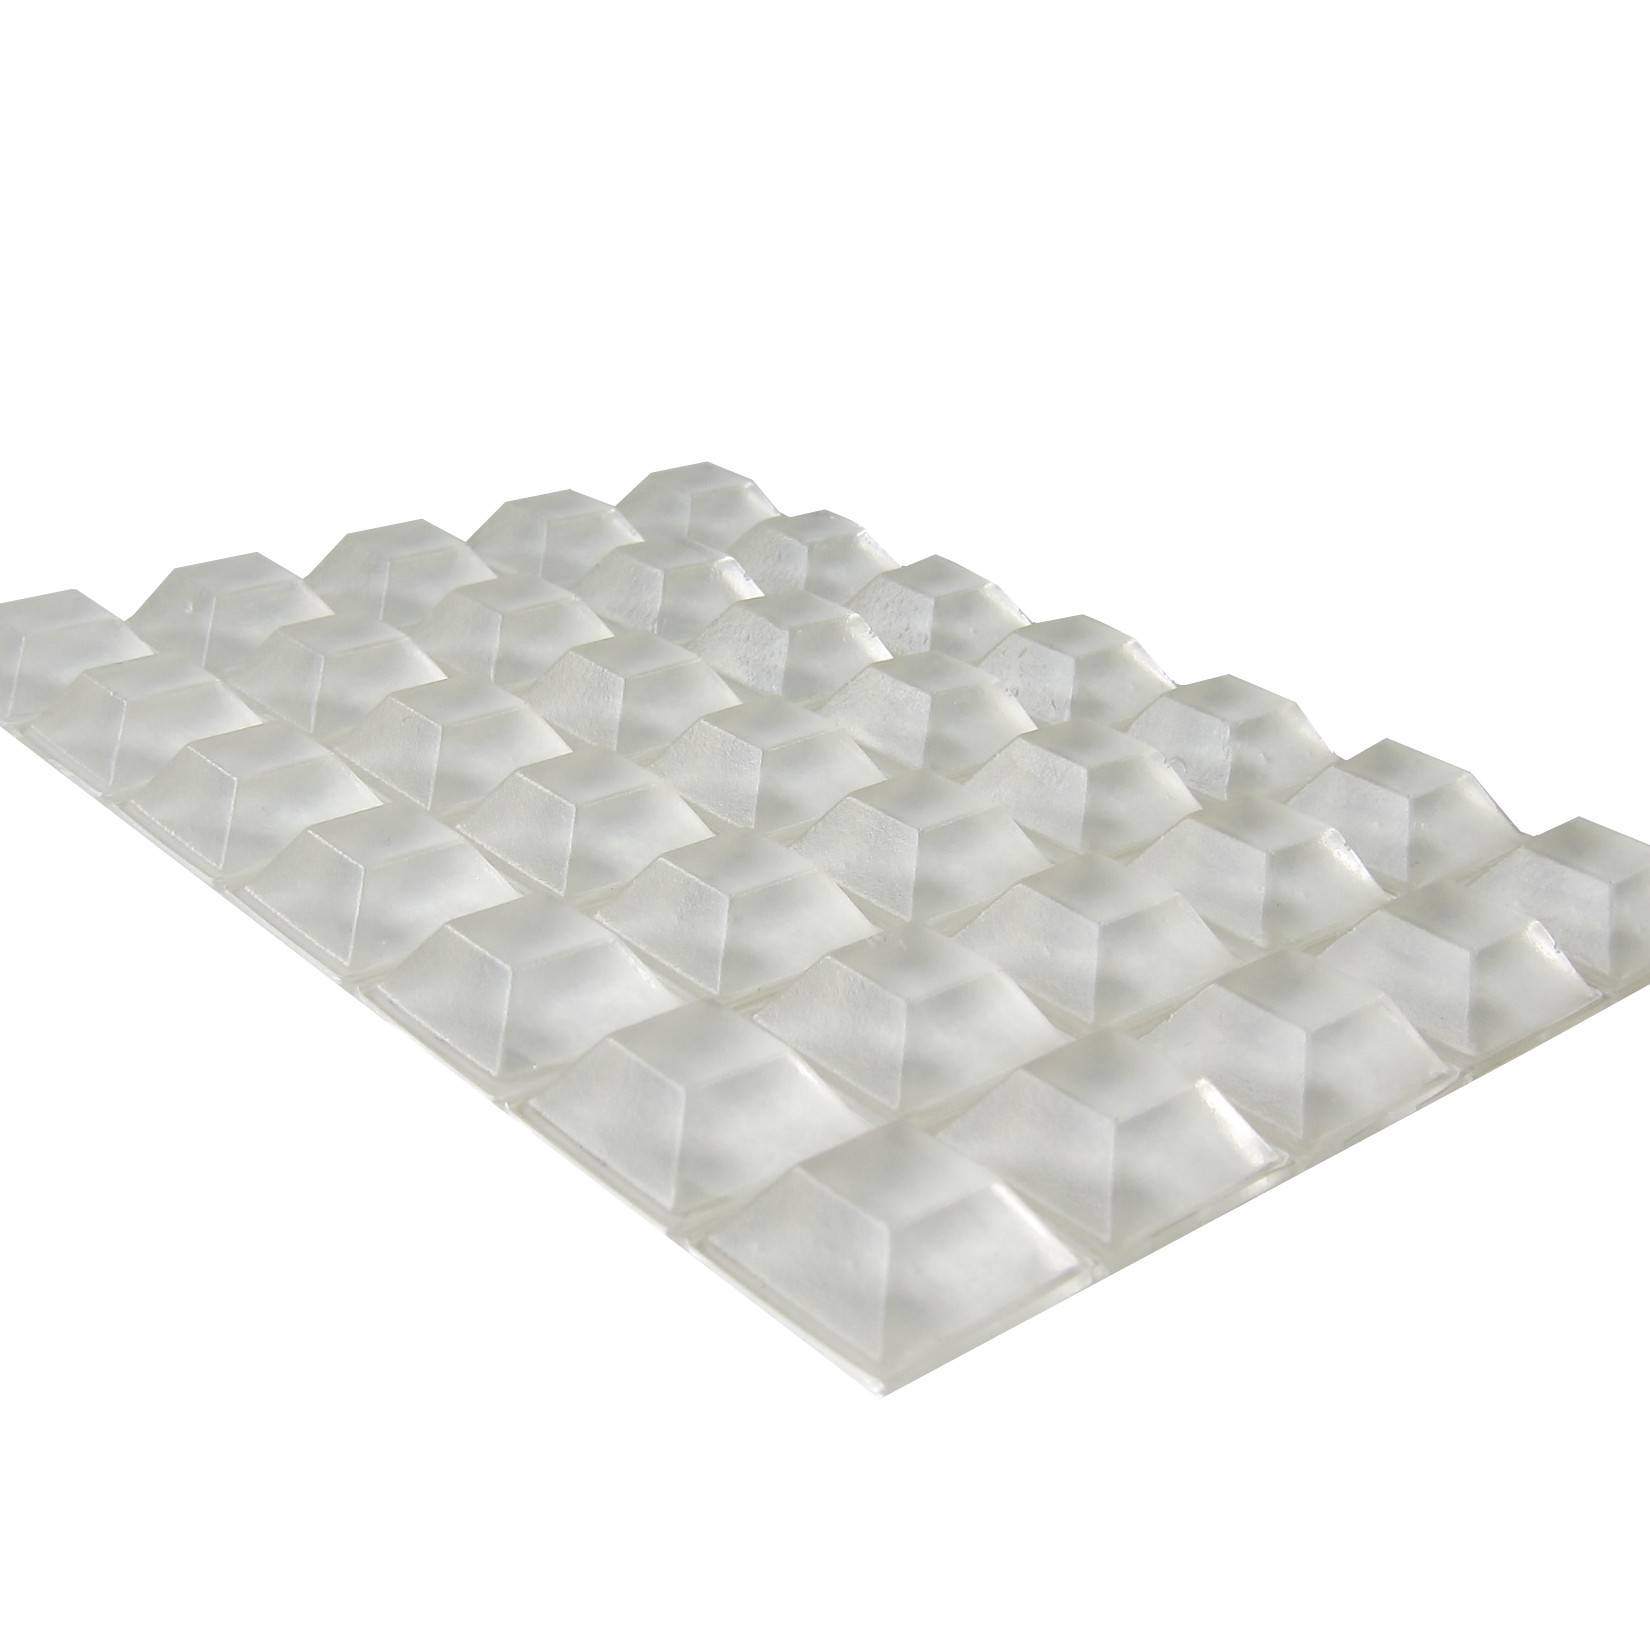 transparent rubber feet pad